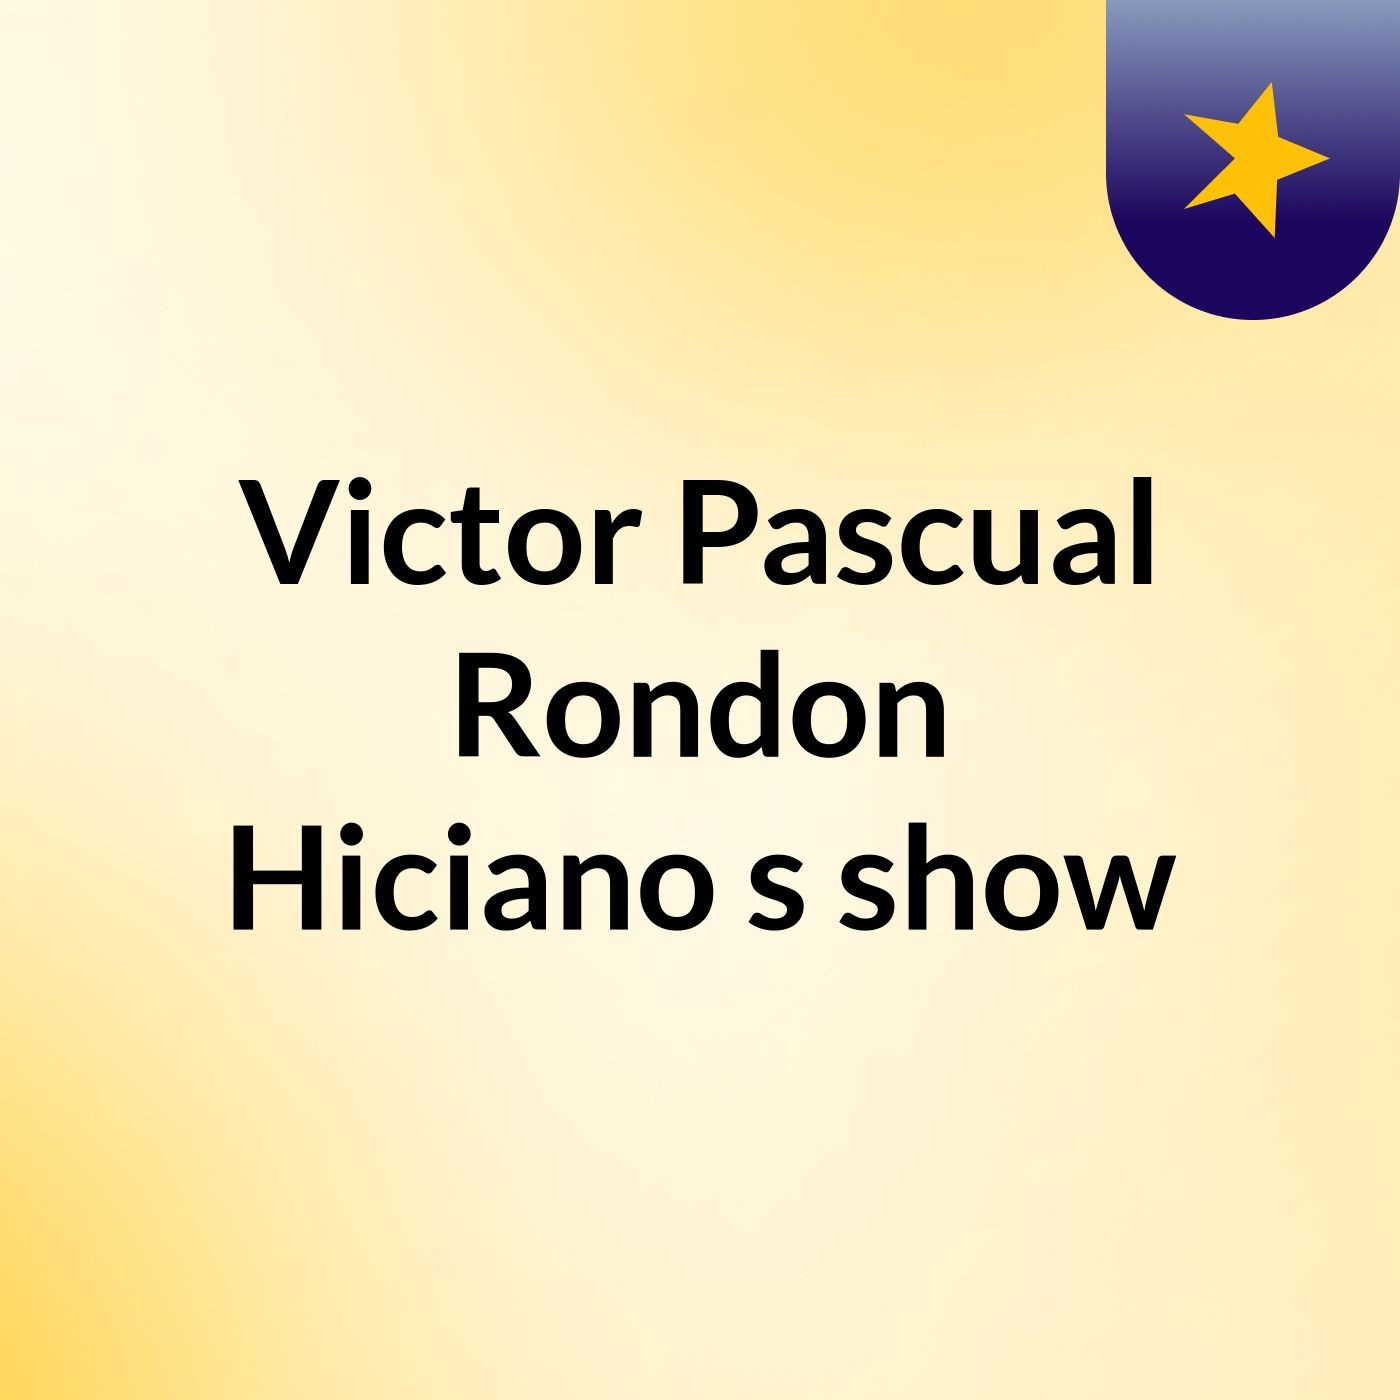 Victor Pascual Rondon Hiciano's show